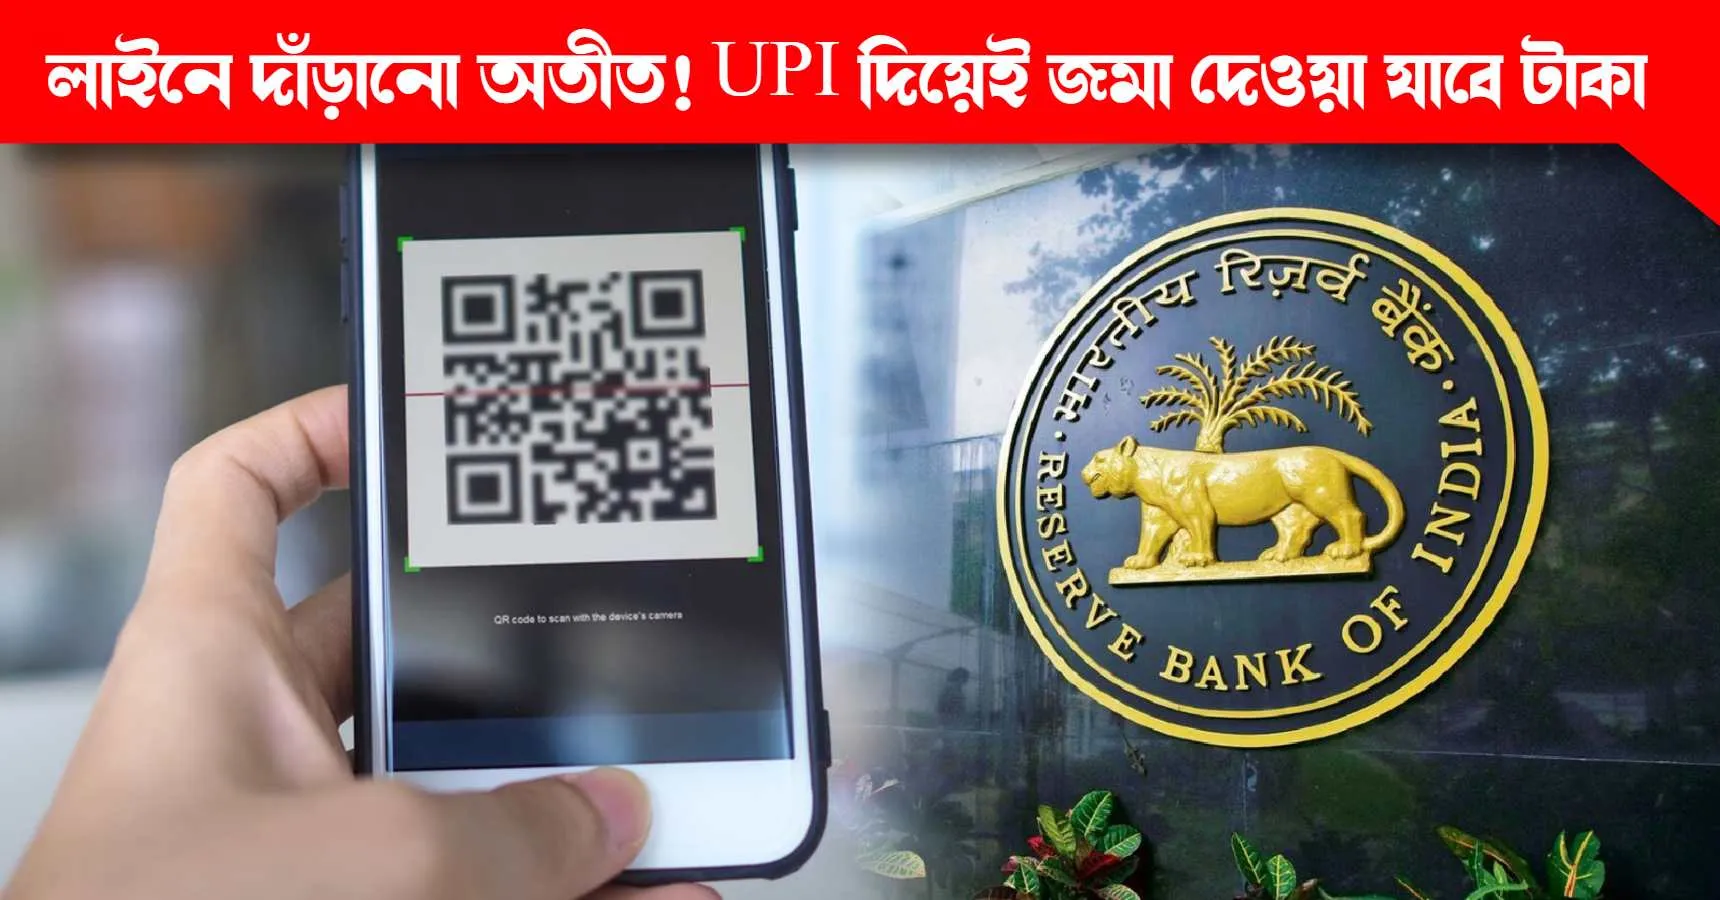 UPI Cash Deposit System Annouced by RBI